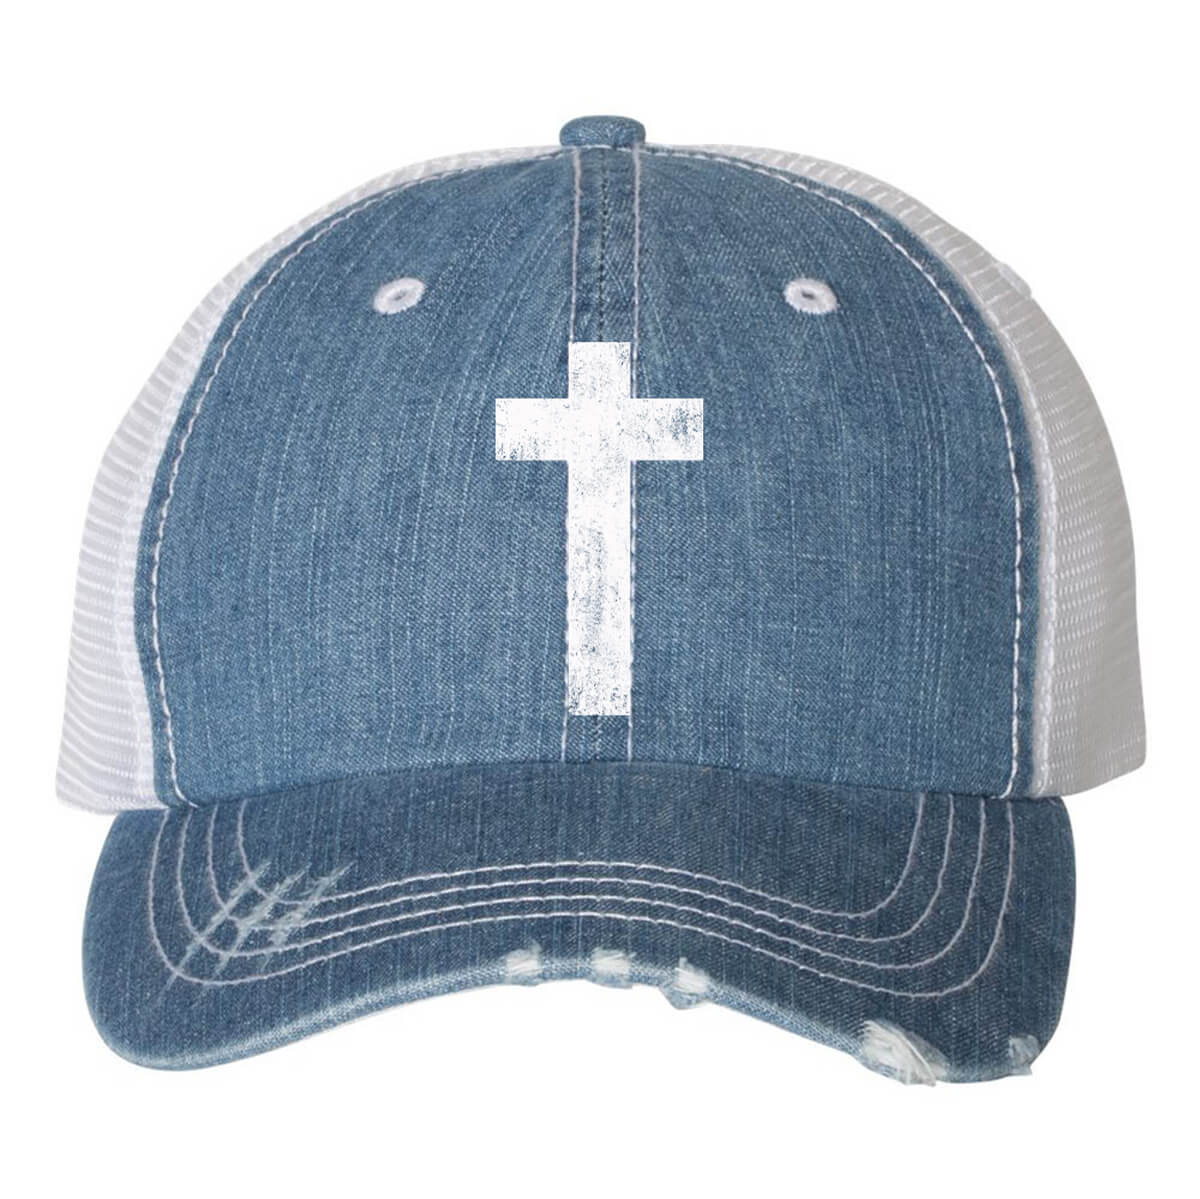 Cross Embroidered Trucker Cap